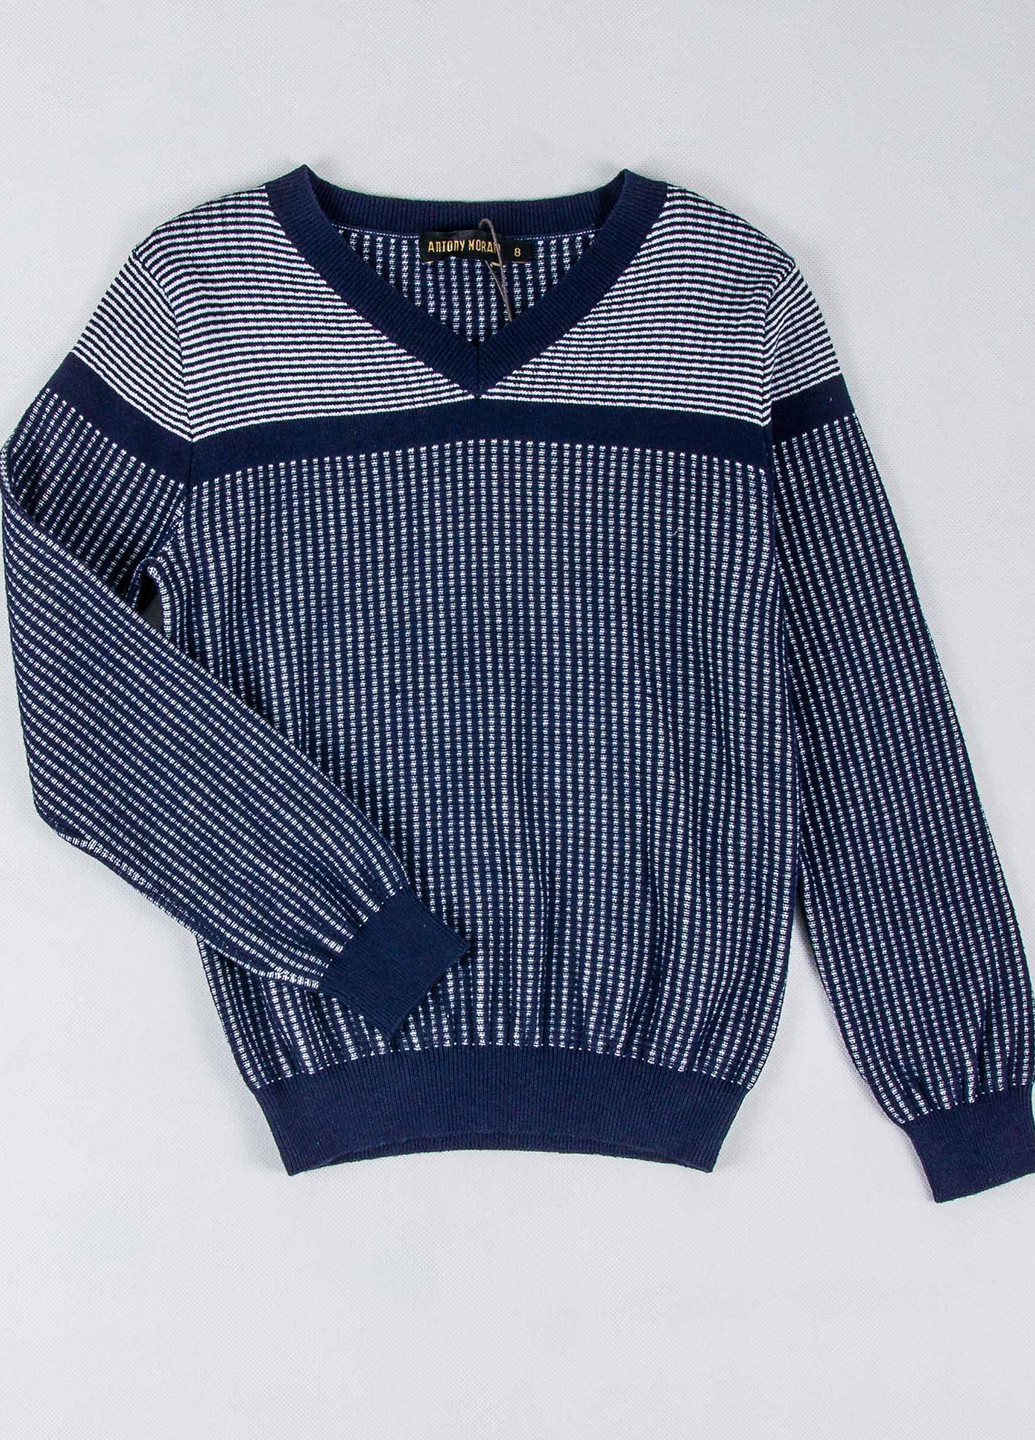 Темно-синий демисезонный пуловер пуловер Antony Morato